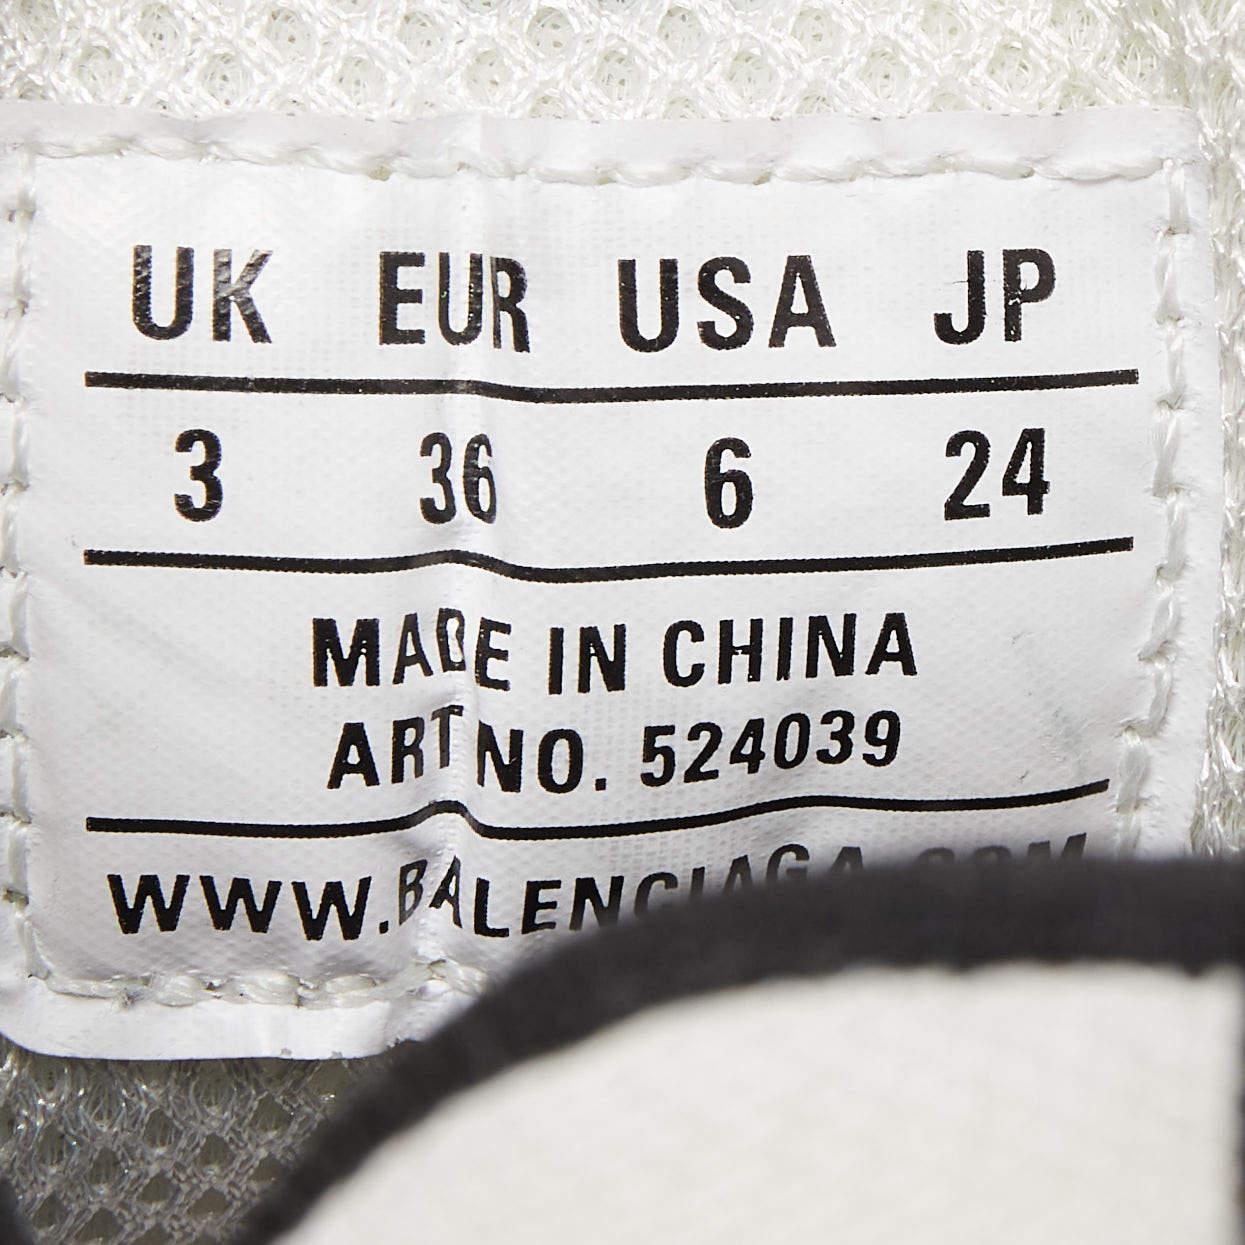 Balenciaga Multicolor Mesh and Nubuck Triple S Sneakers Size 36 3